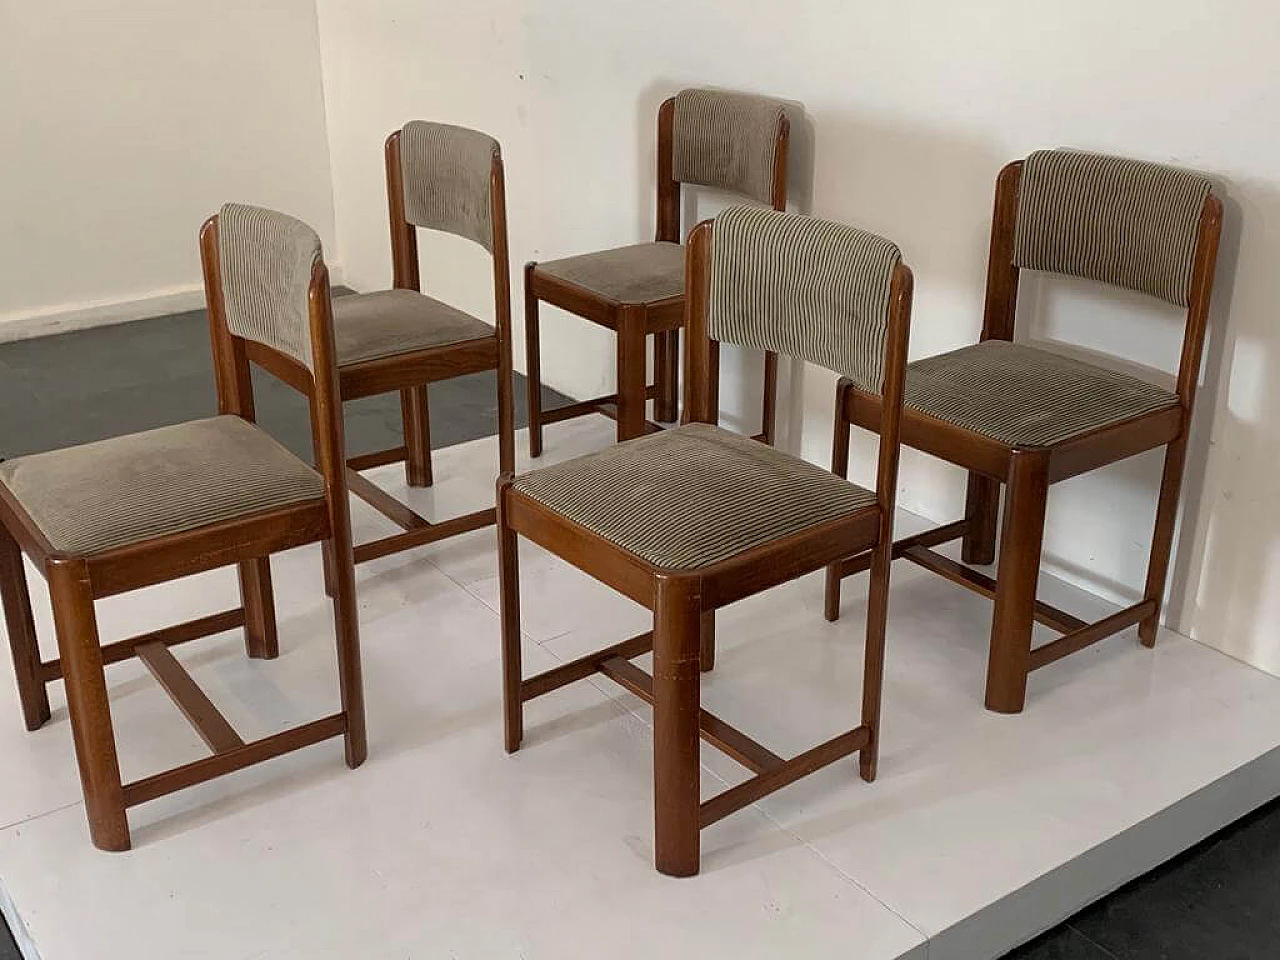 5 Walnut and beech chairs, 1970s 5